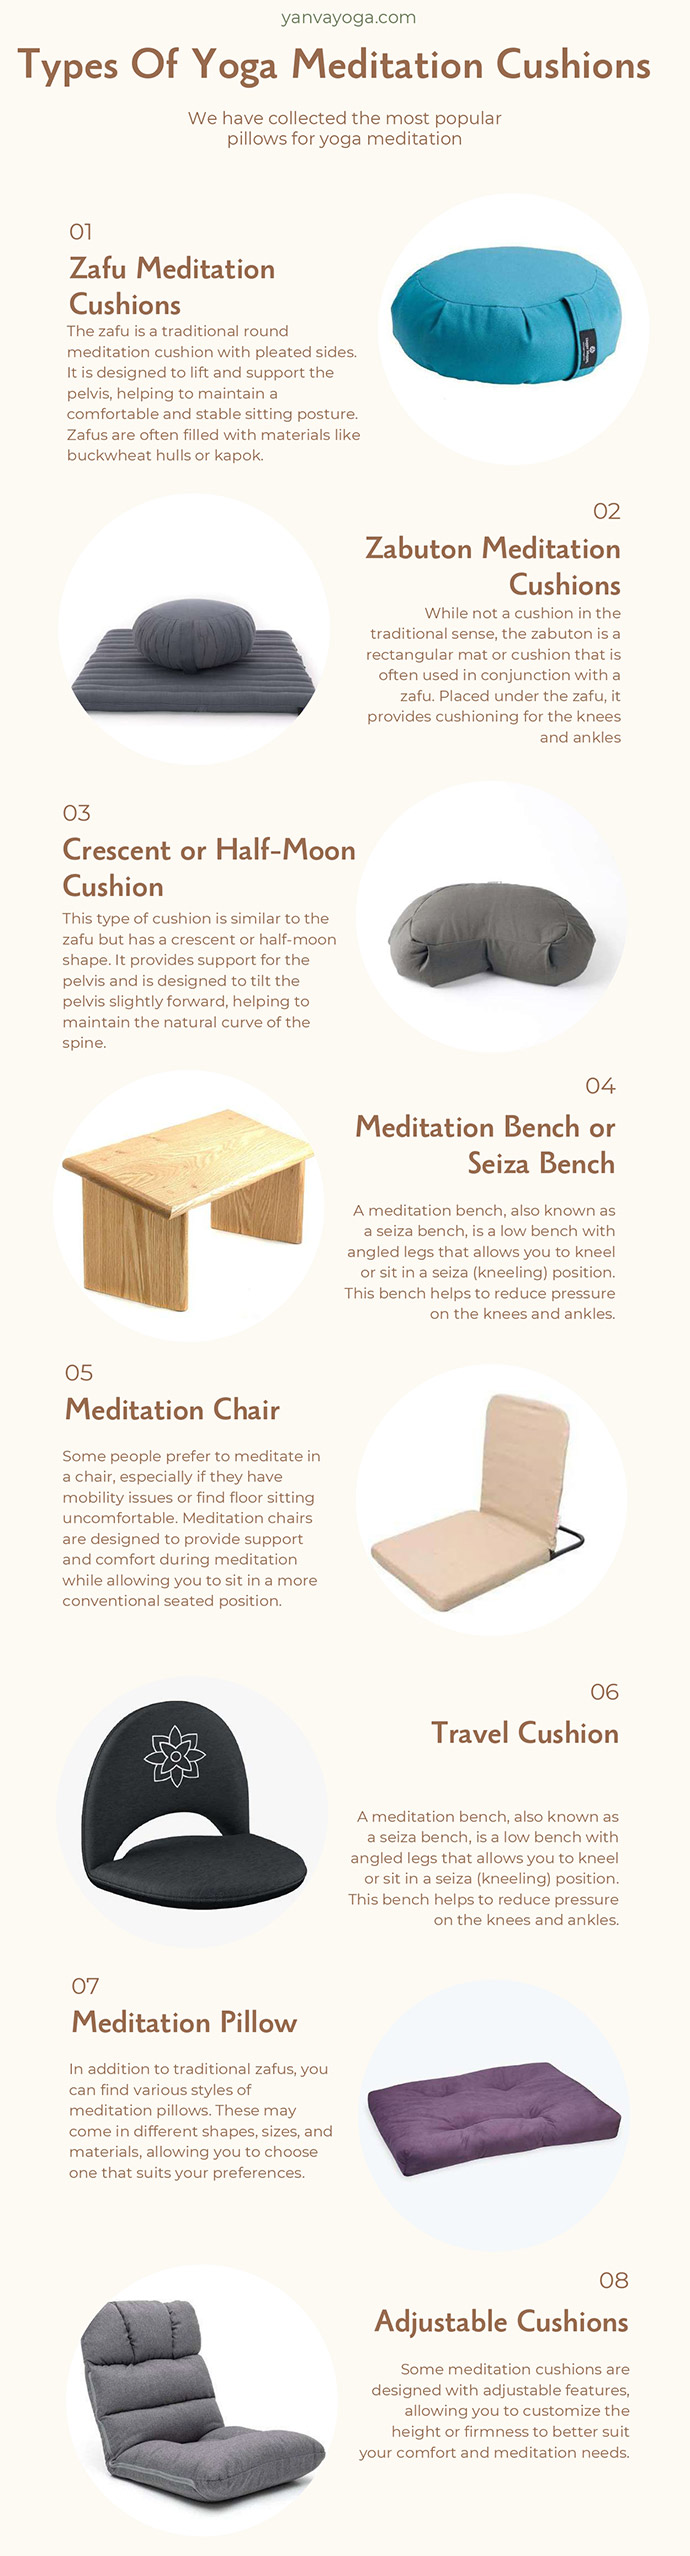 Types Of Yoga Meditation Cushions Infographic